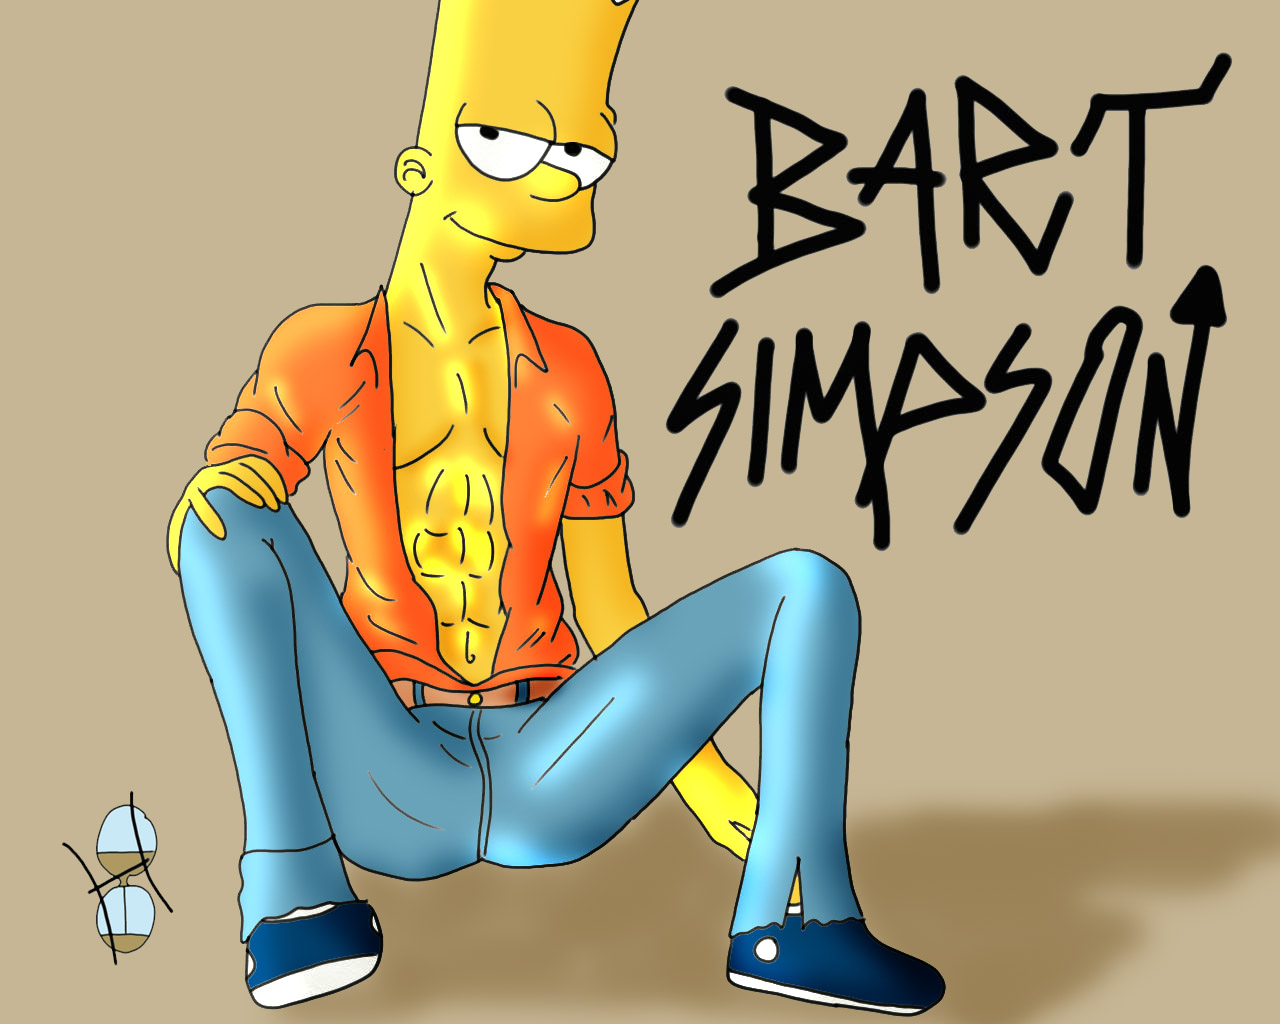 Bart sexy